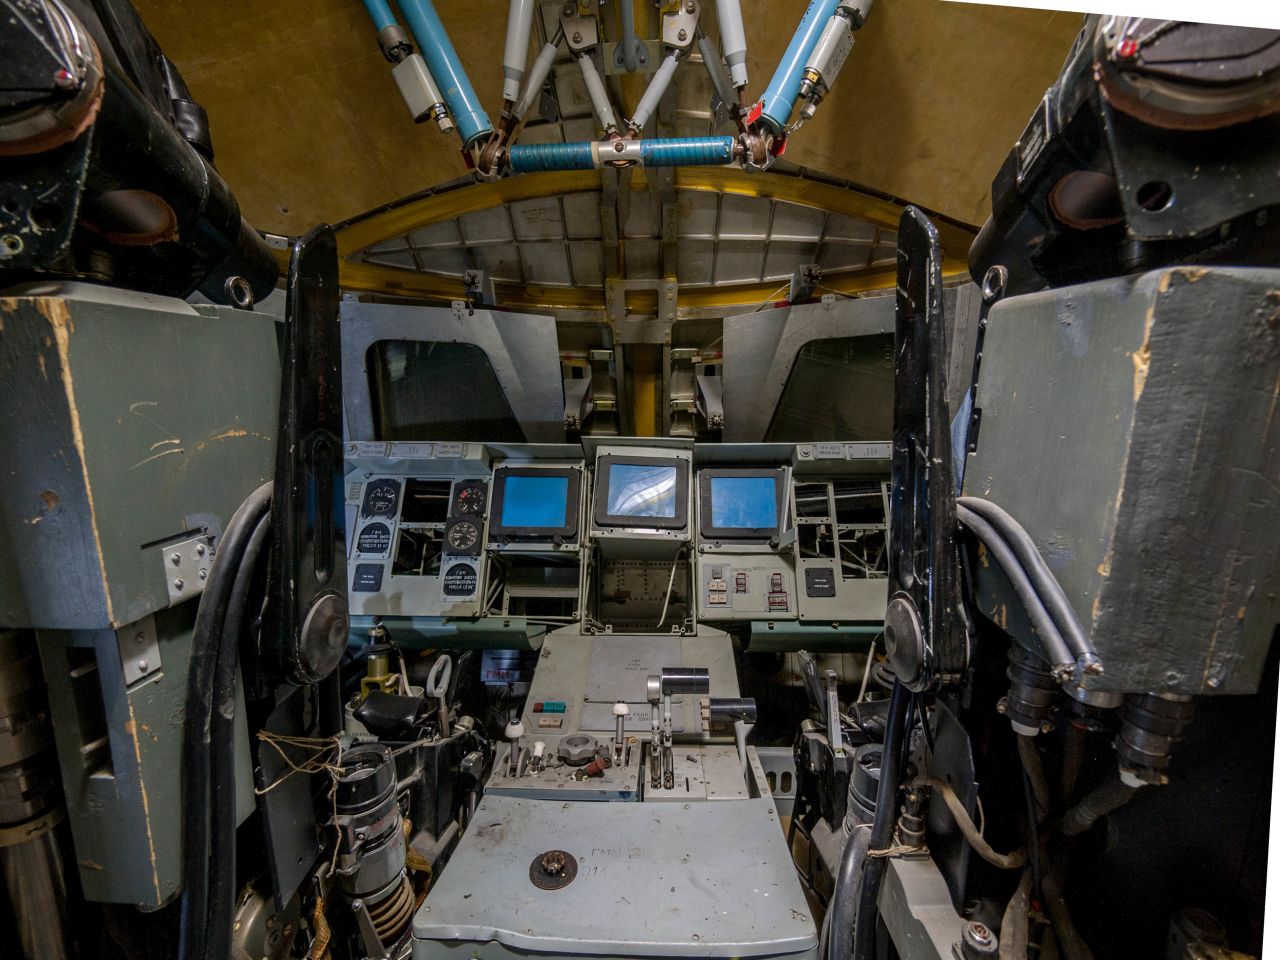 A glimpse inside the cockpit. 